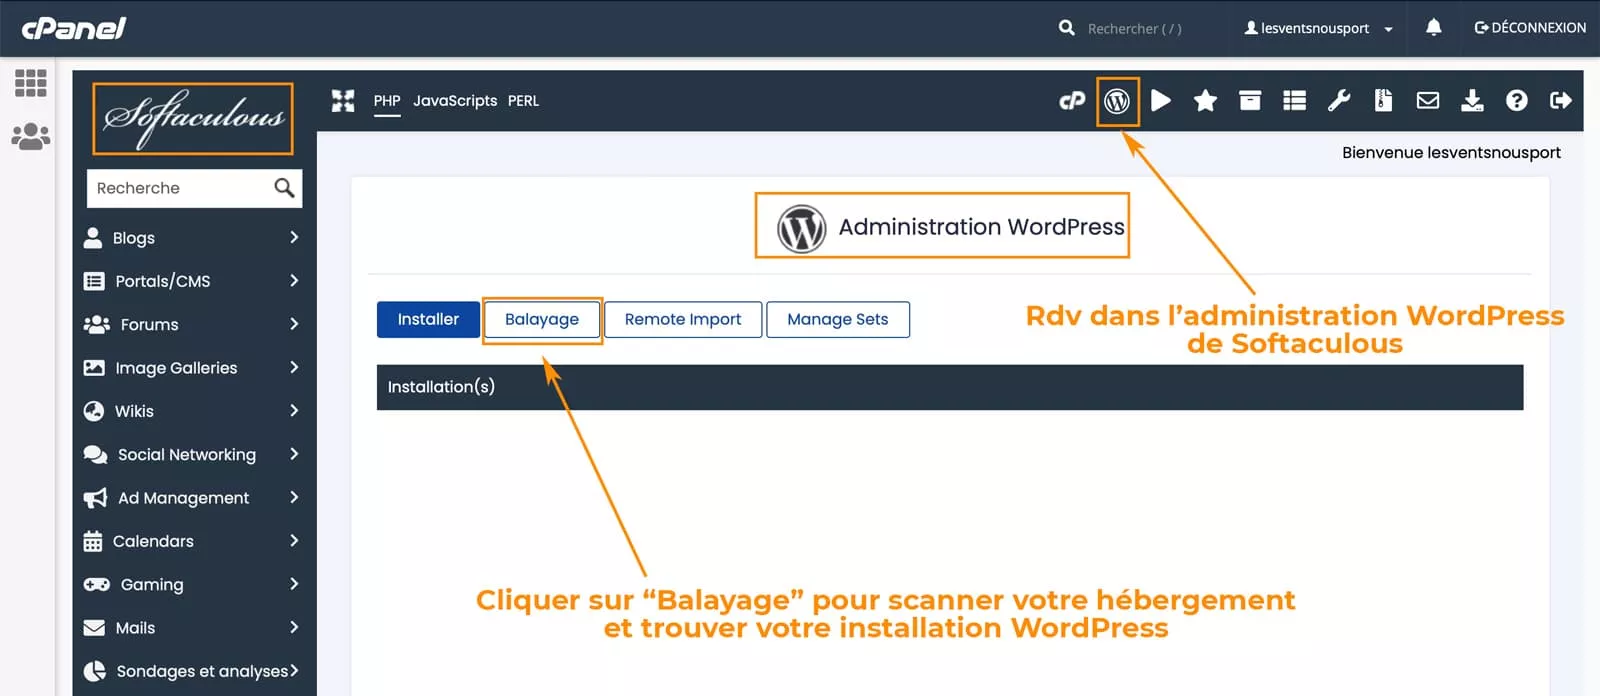 tutoriel refonte site wordpress 2 2 | Refonte d'un site WordPress => Tutoriel Complet